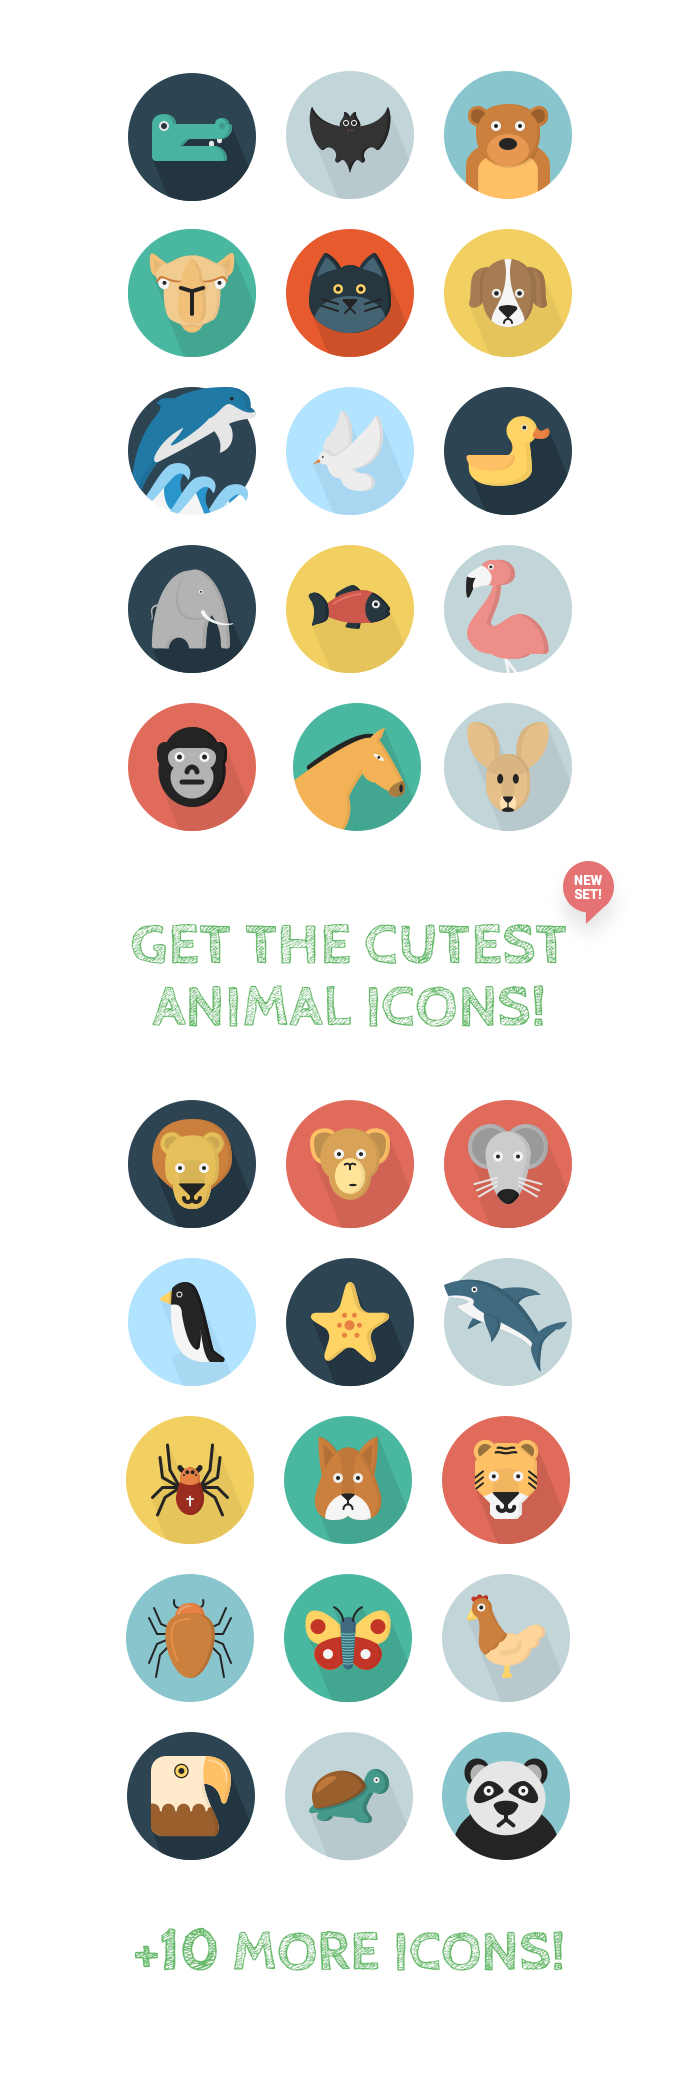 Free animal icons